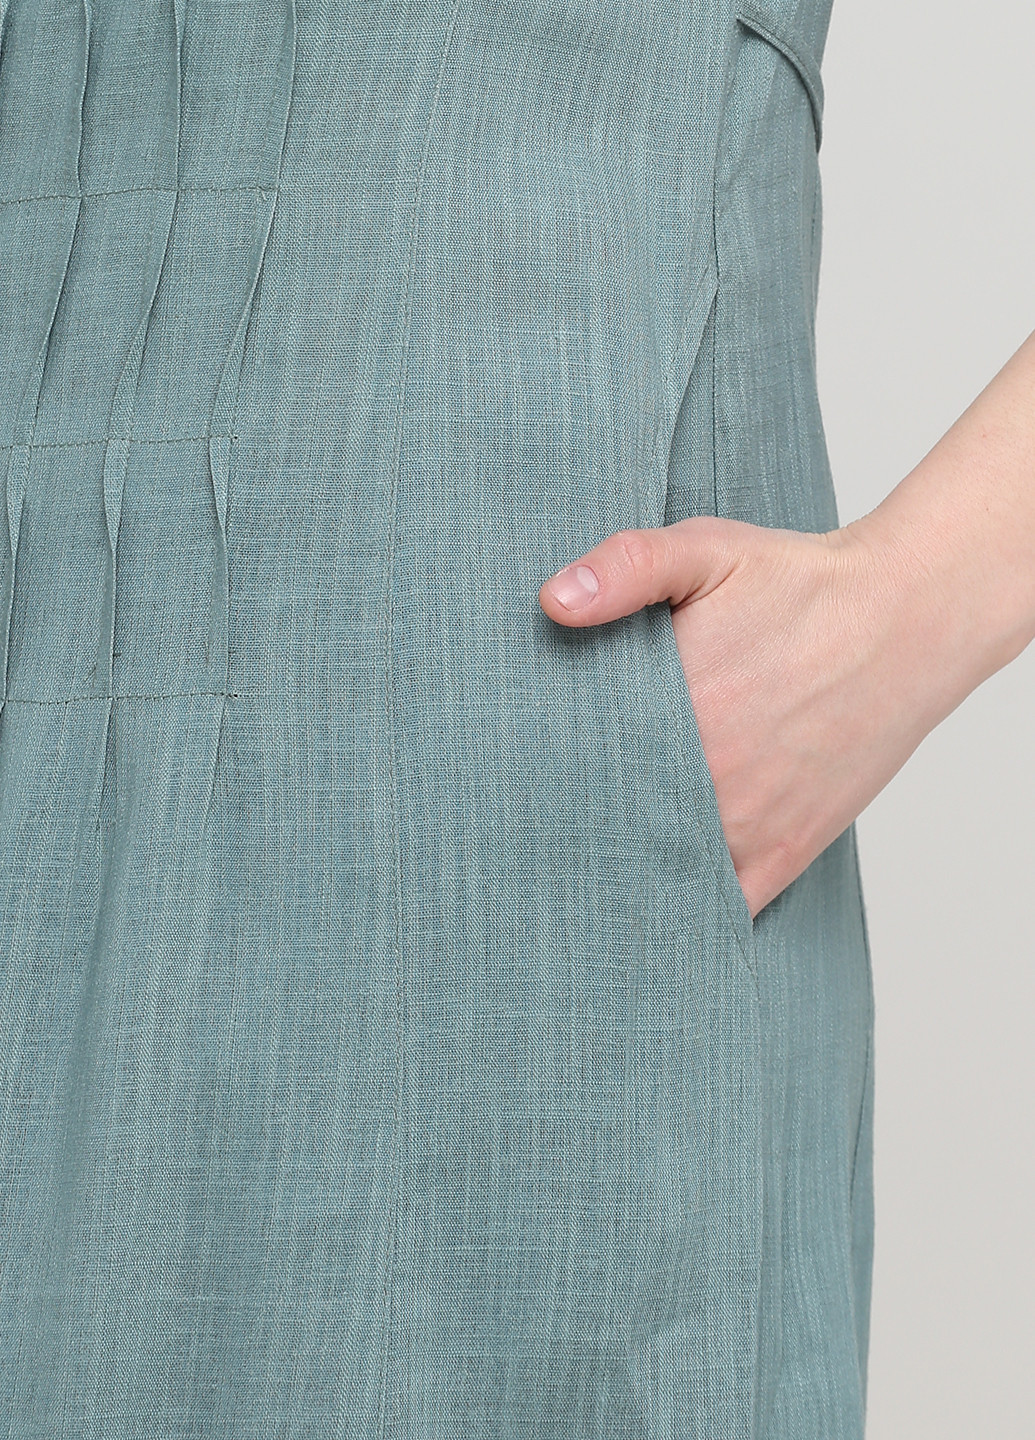 Сіро-голубий кежуал сукня кльош Ruta-S однотонна